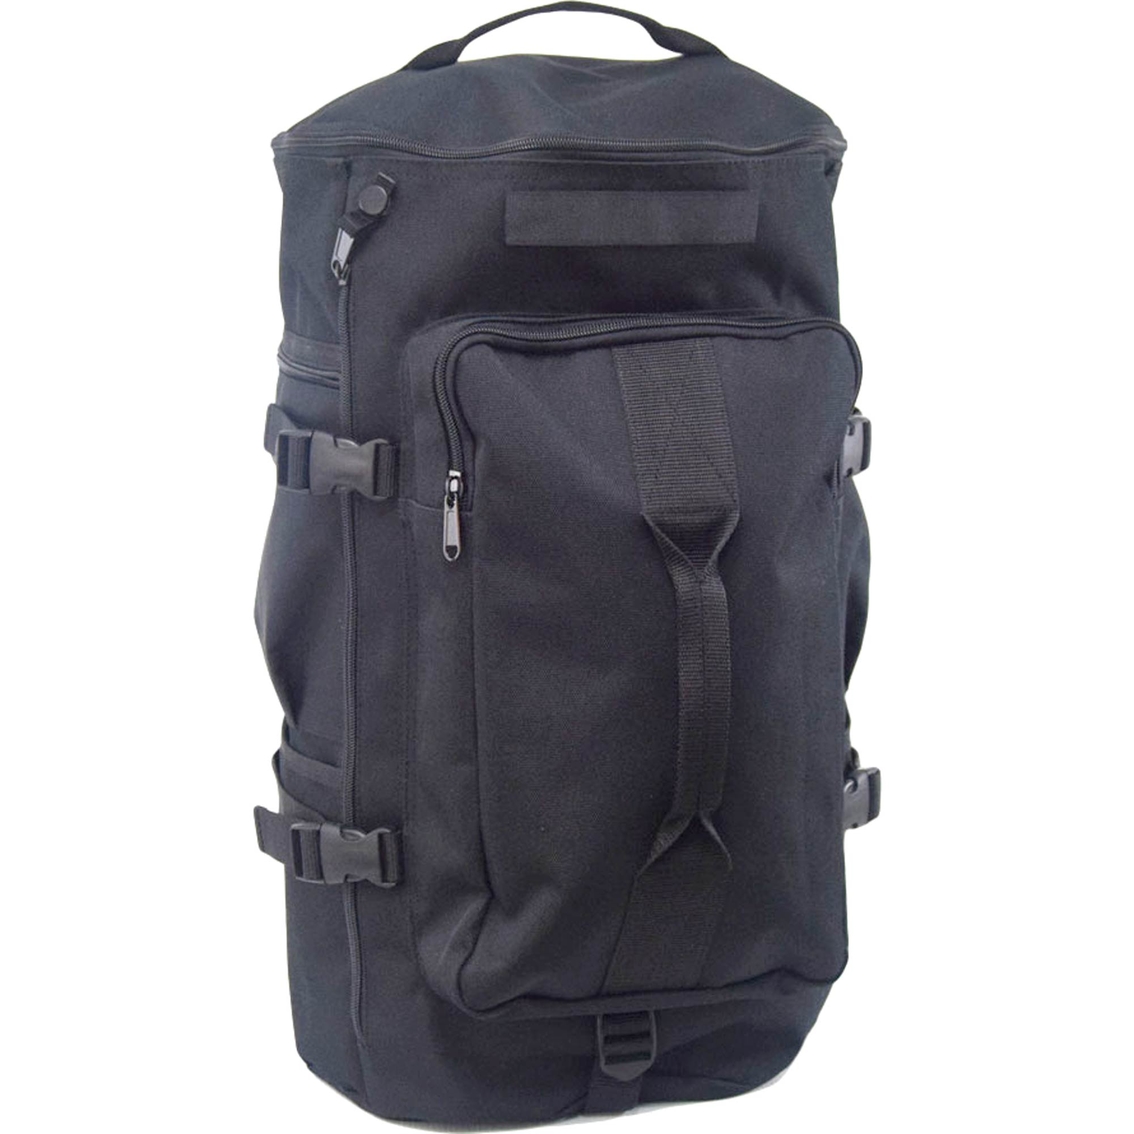 Backpacks & Duffles - Accessories